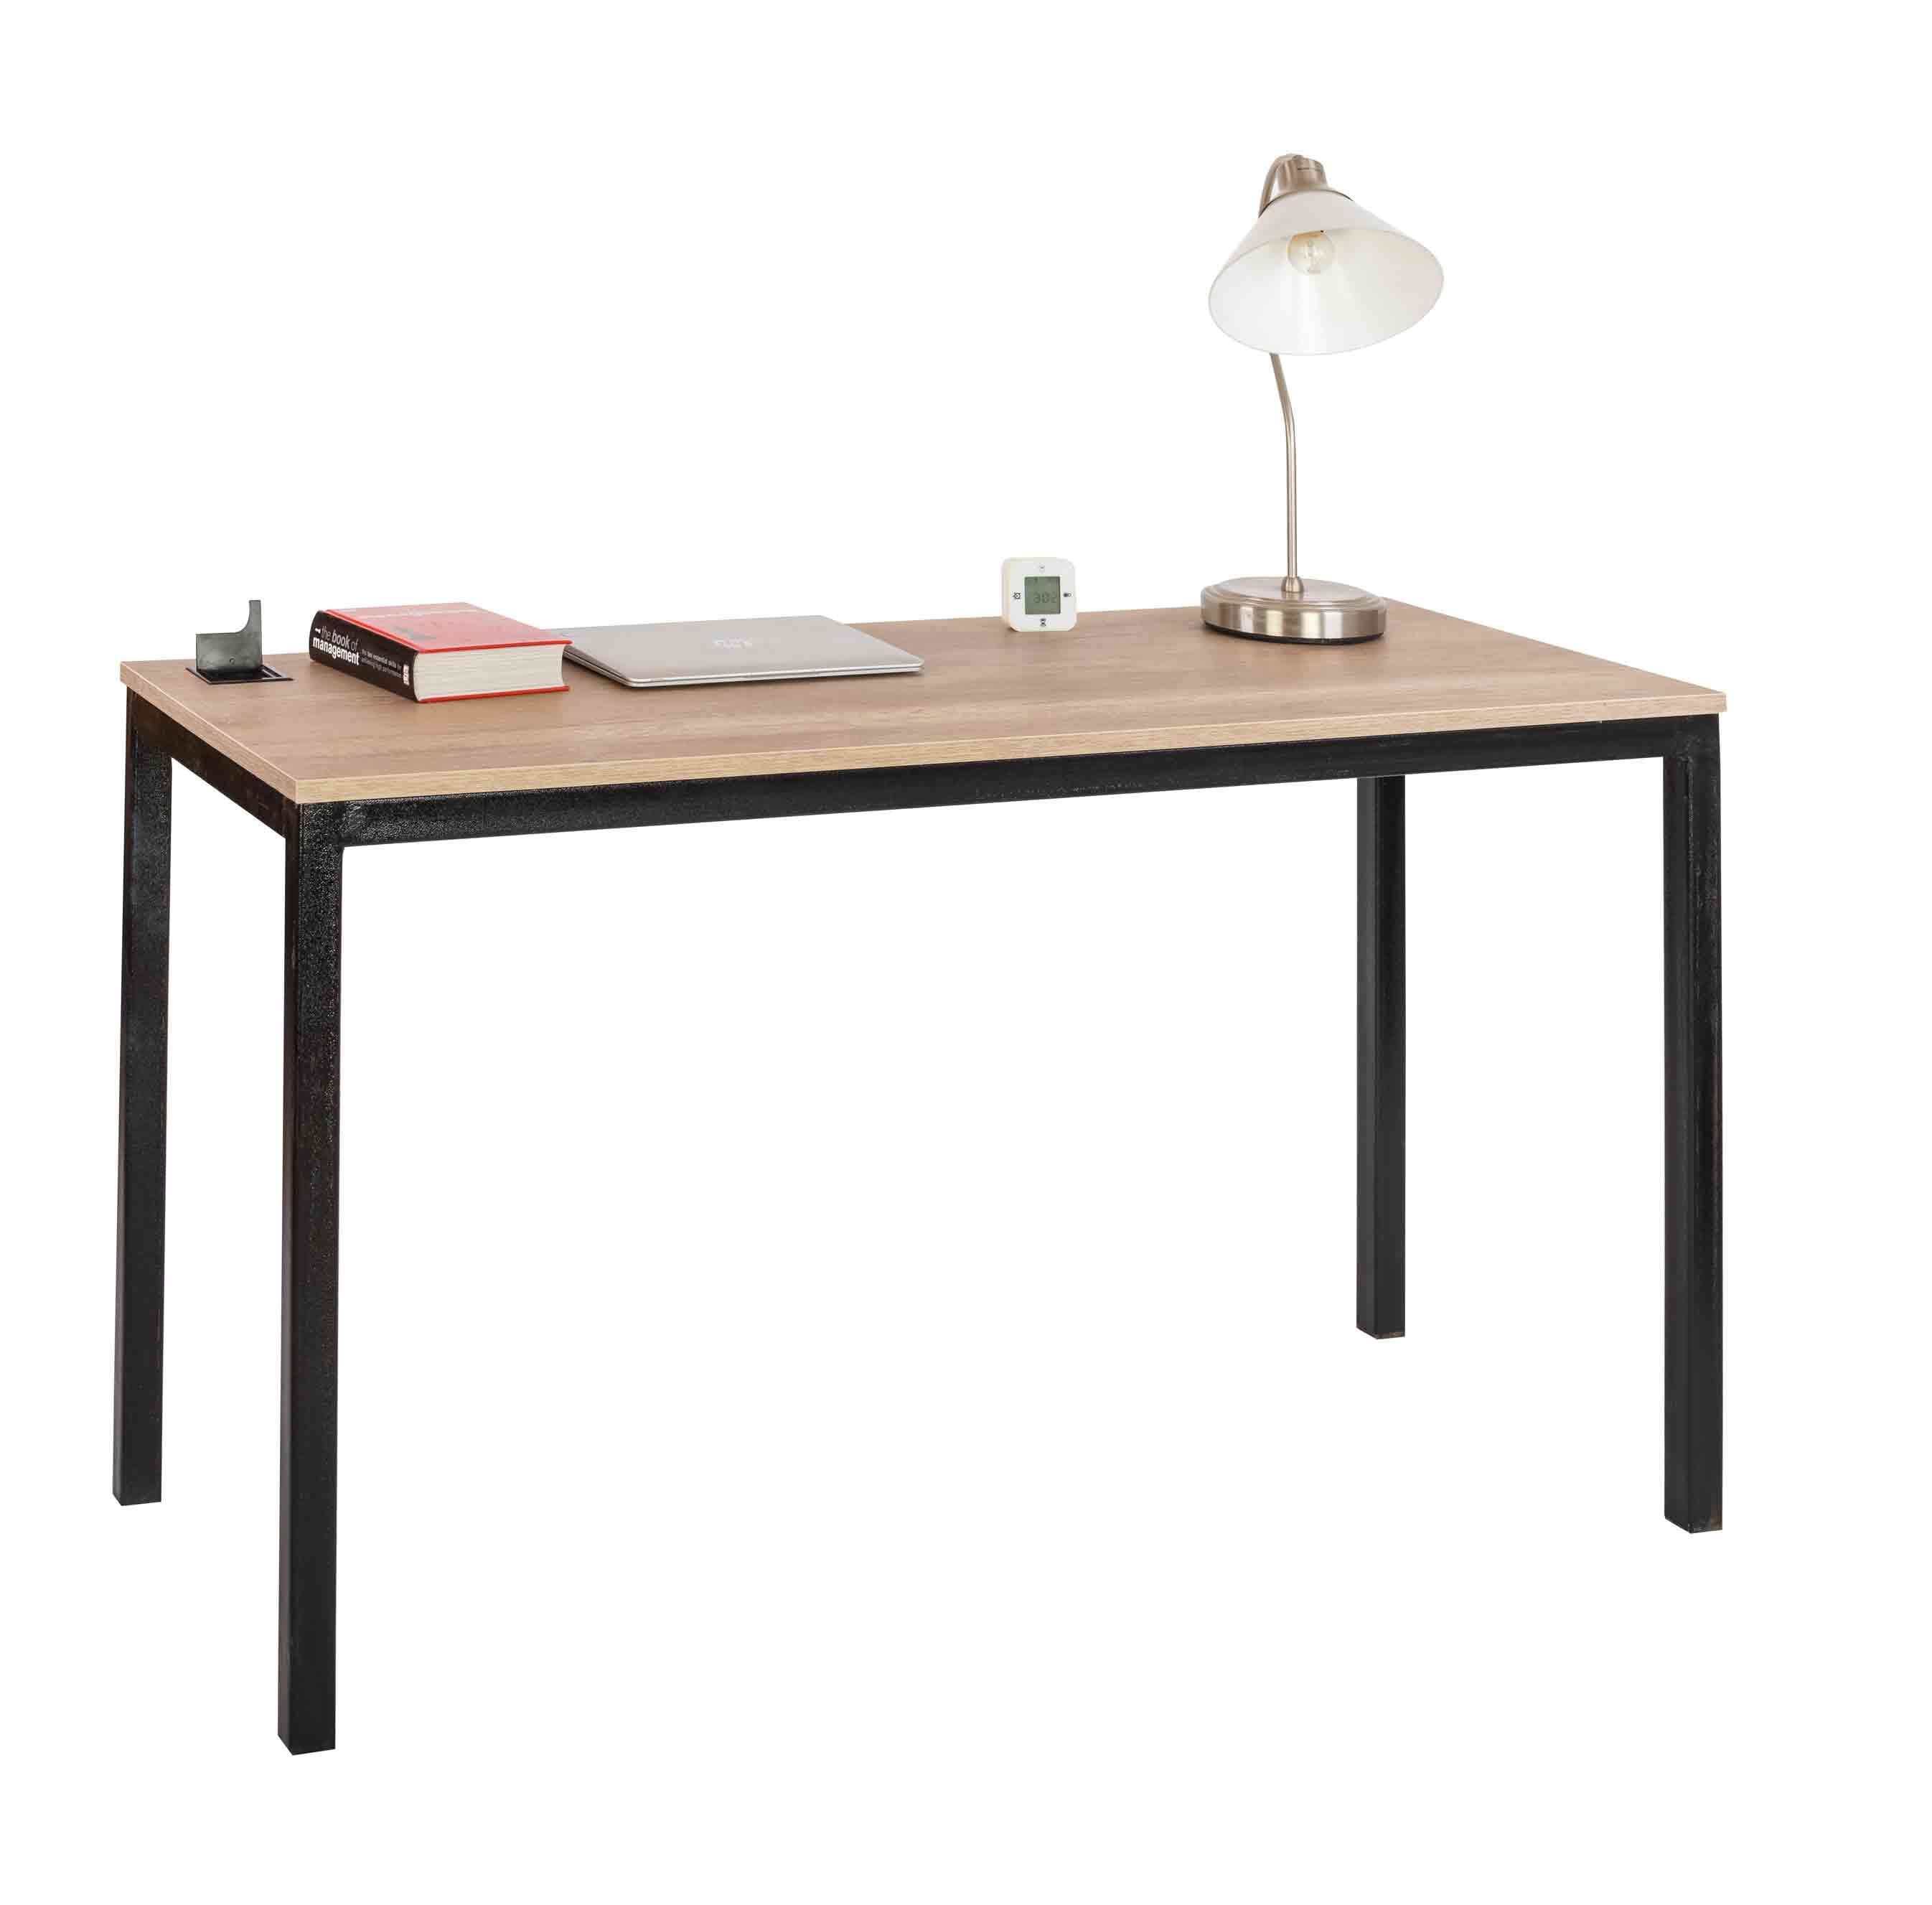 MAVY Desk (size 110cm x 60cm)